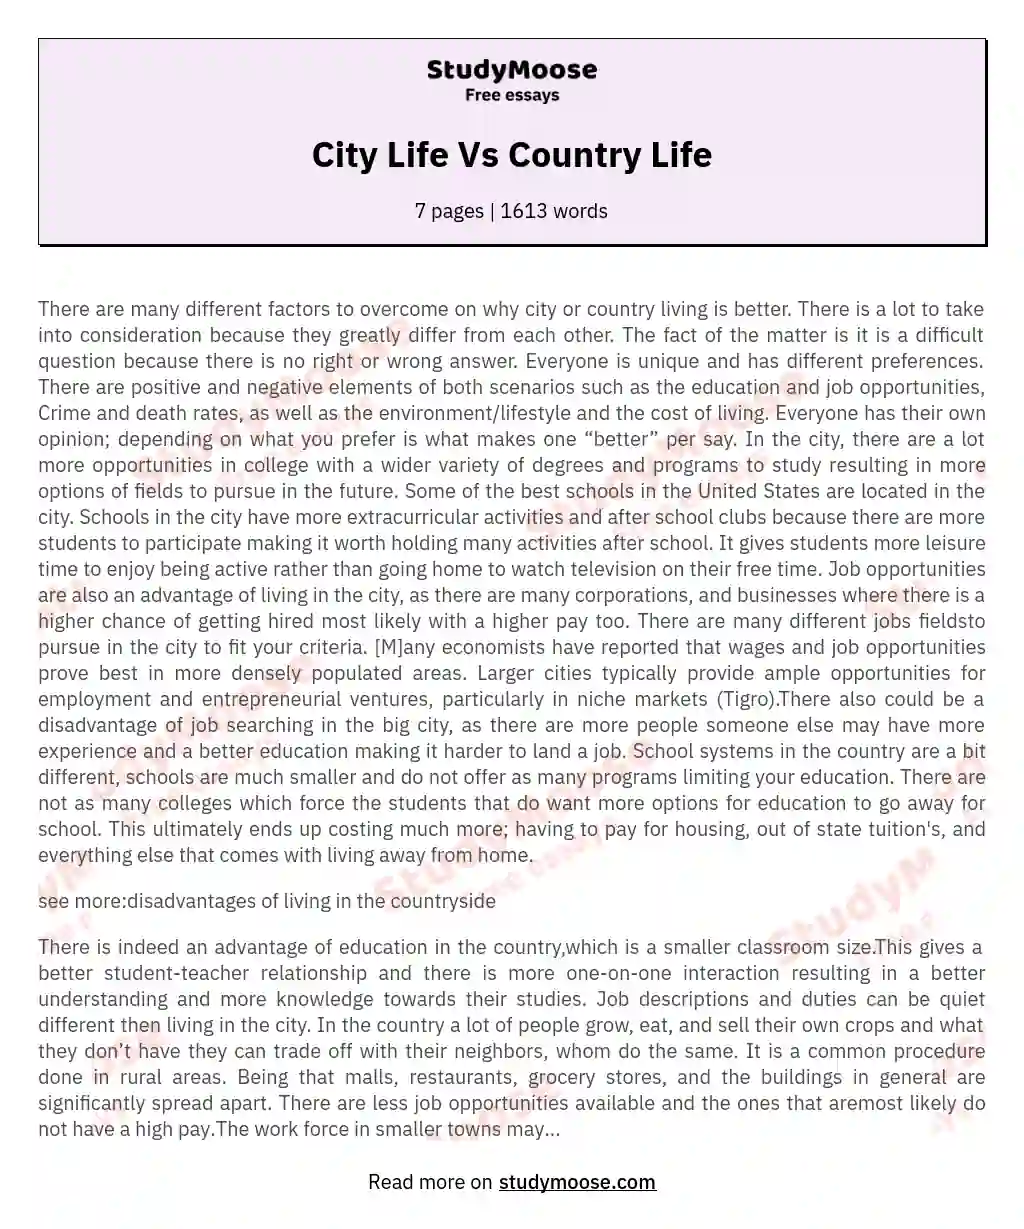 City Life Vs Country Life essay